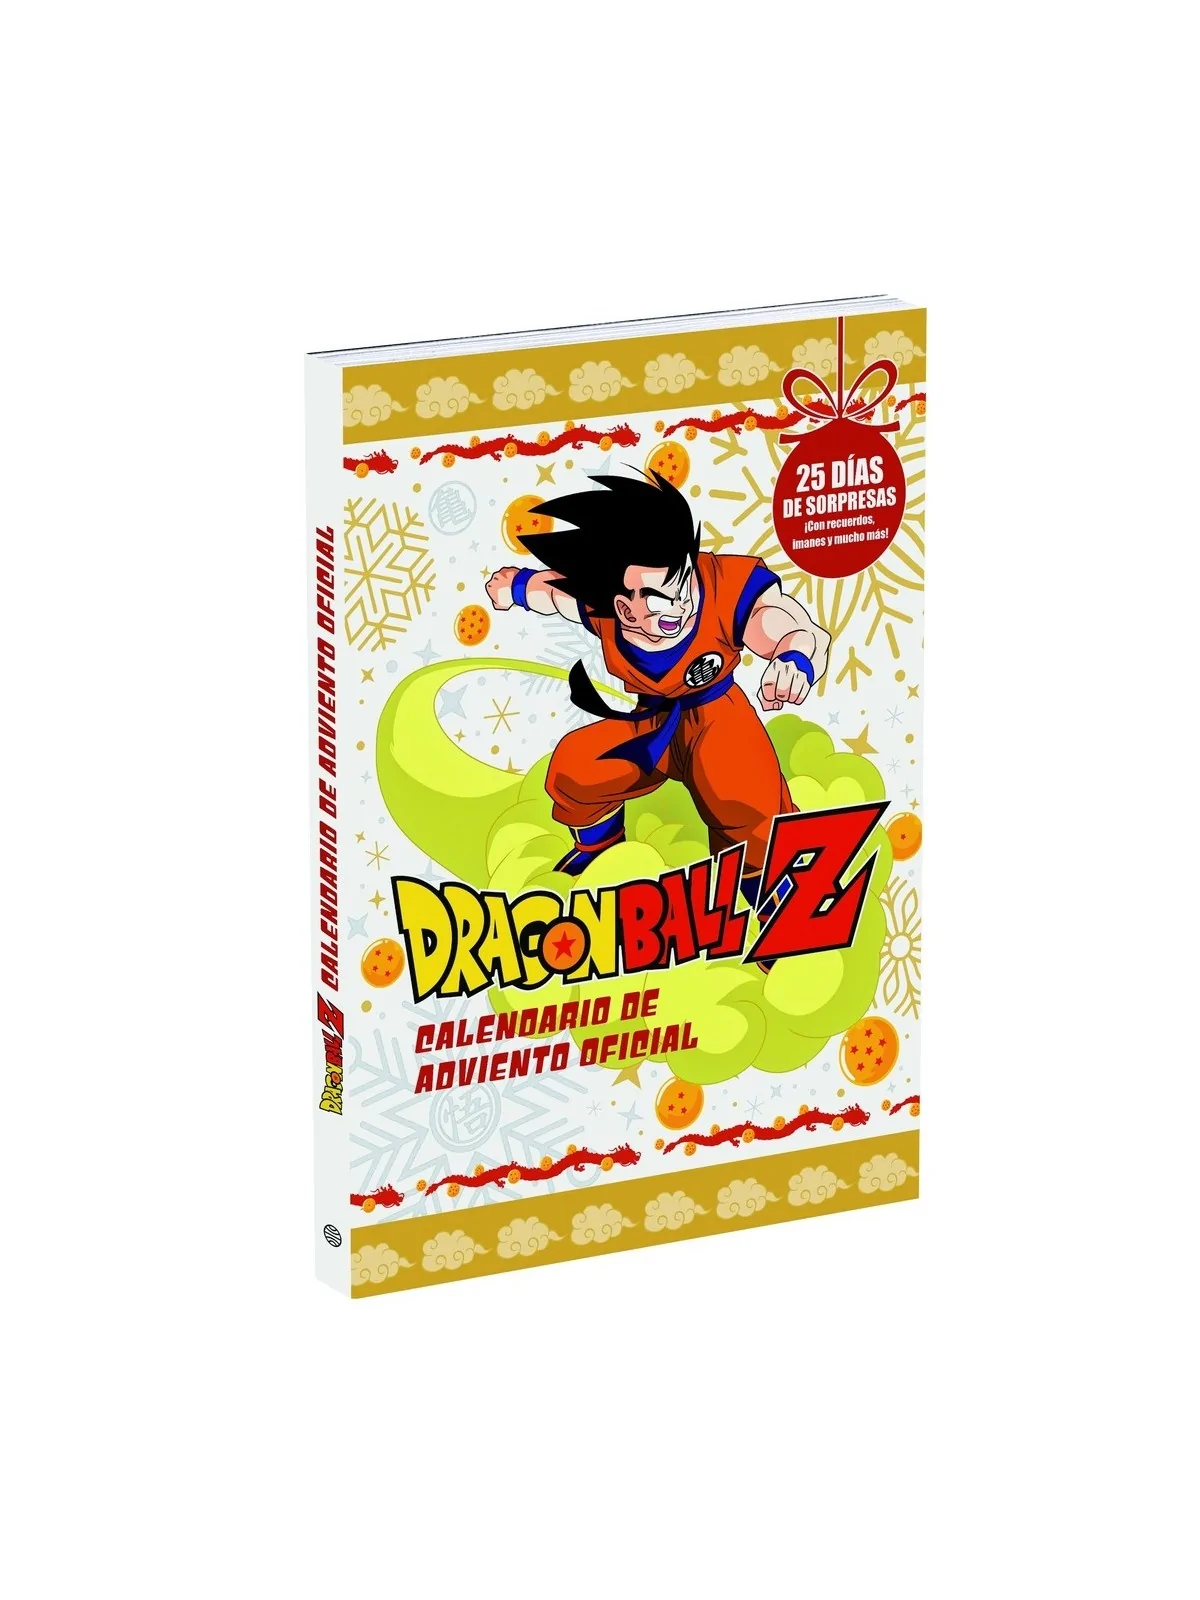 Comprar Dragon Ball Z Calendario de Adviento Oficial barato al mejor p